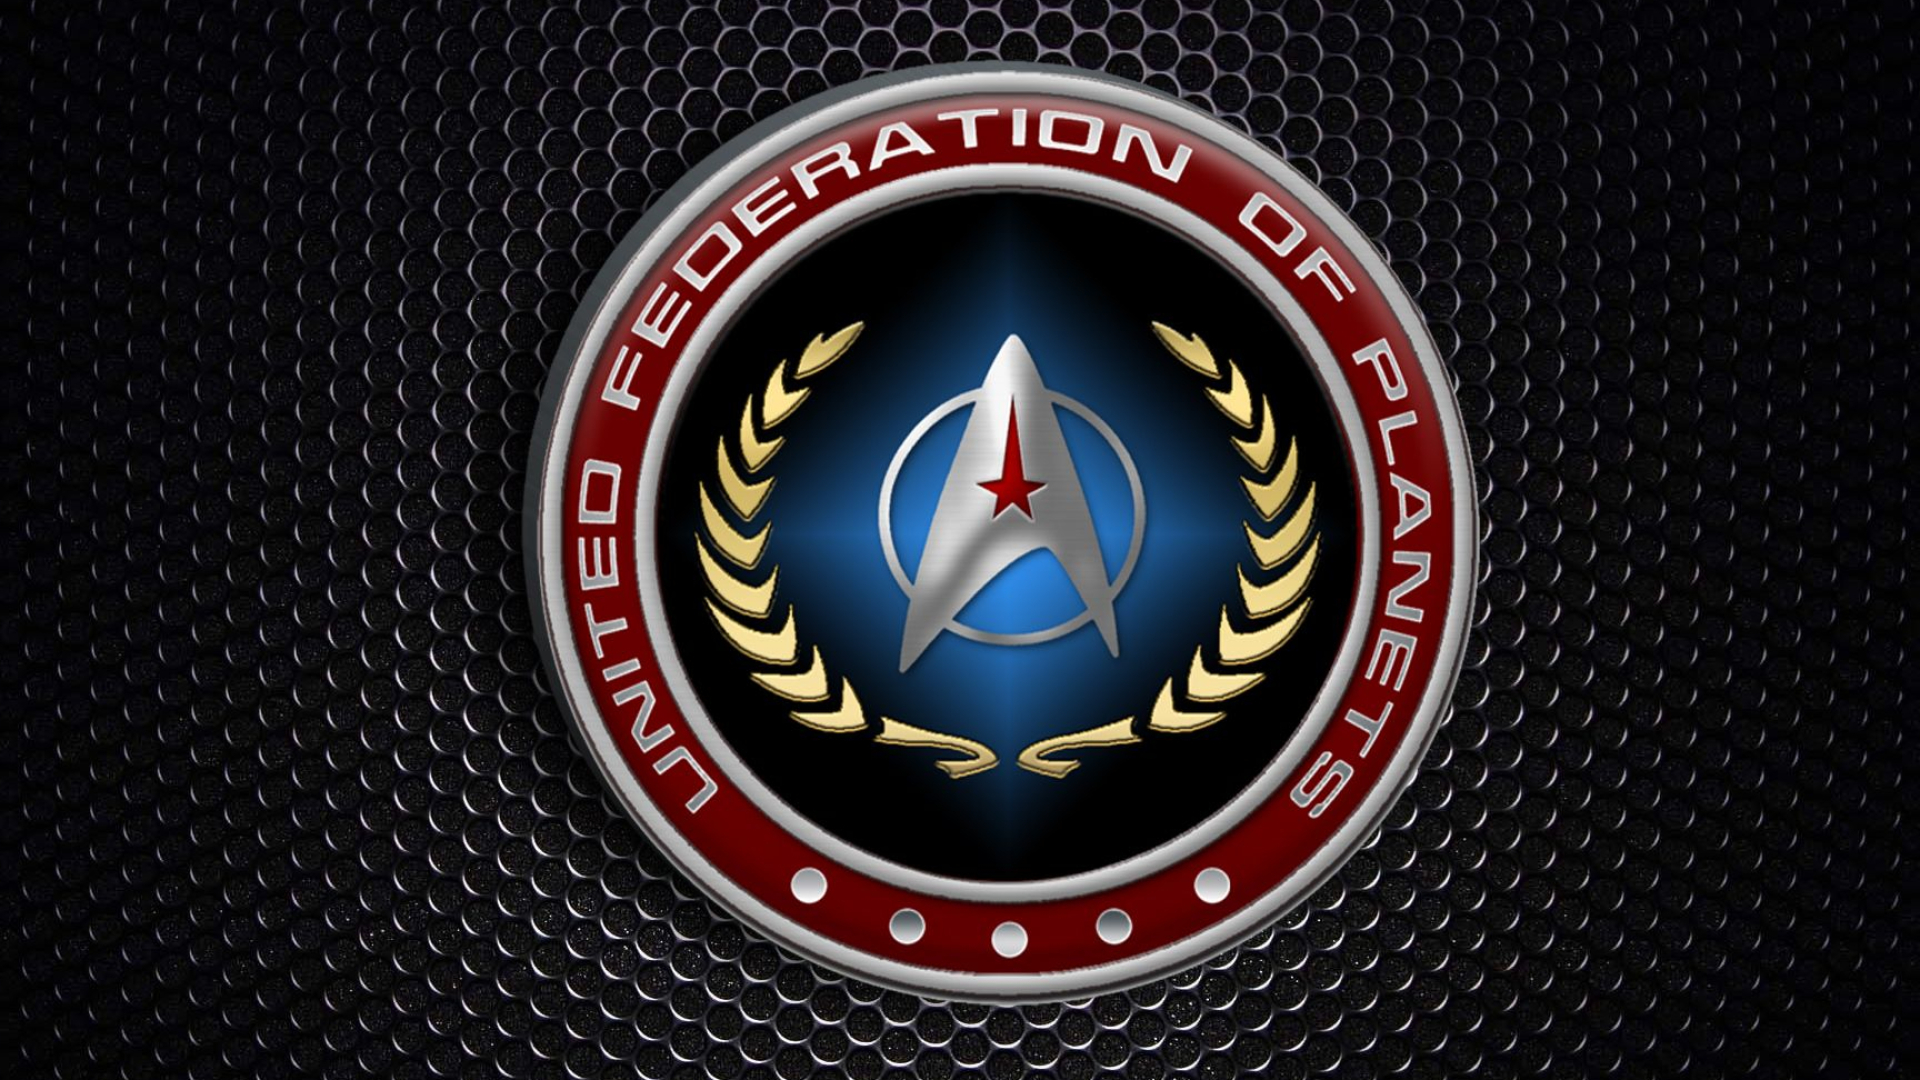 1920x1080 United Federation of Planets logo Starfleet | Star trek art, Star trek artwork, Star trek wallpaper